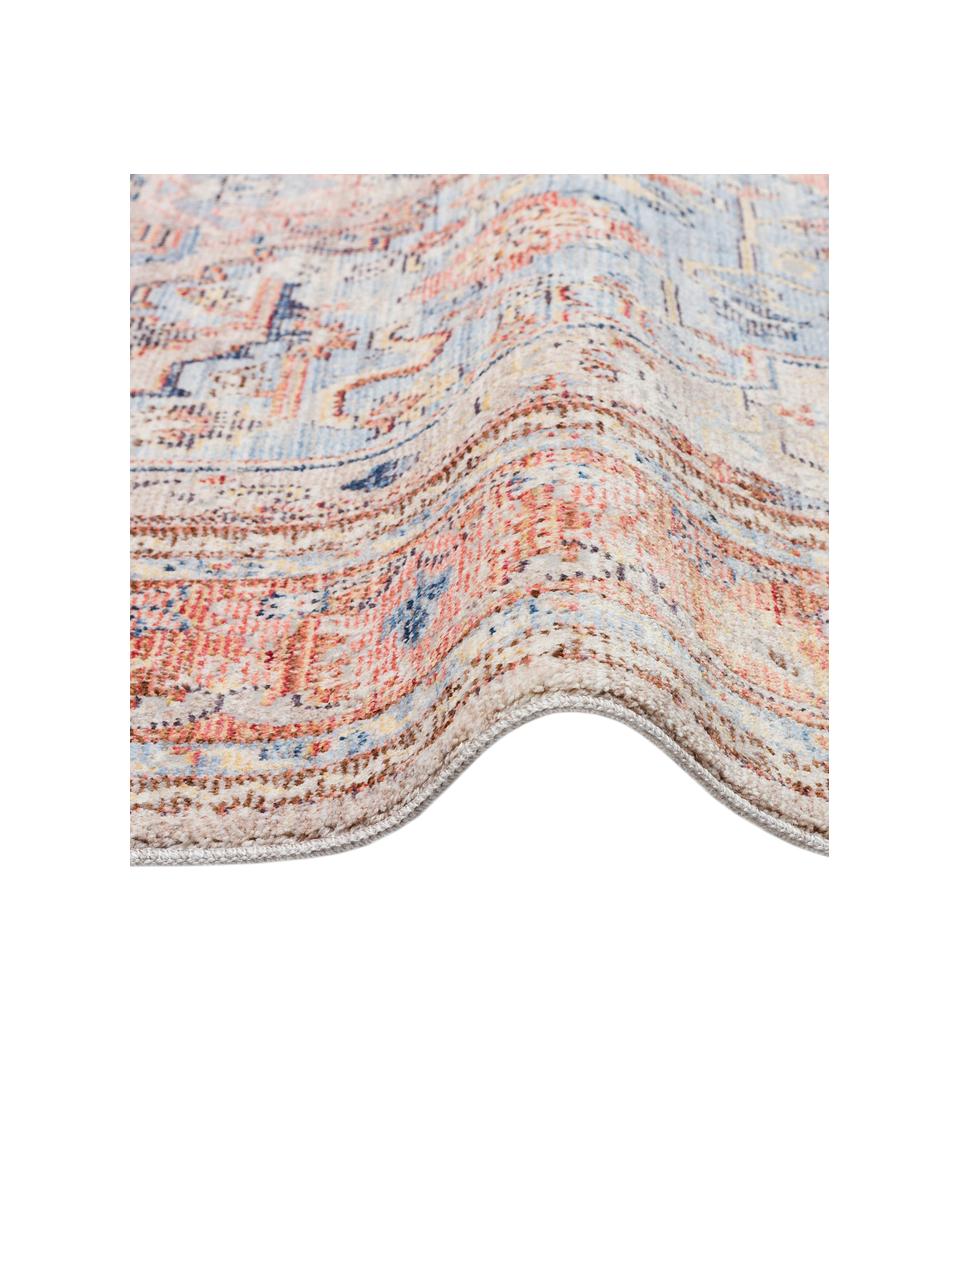 Tapis à poils ras terracotta/bleu Heritage, Terracotta, bleu, multicolore, larg. 120 x long. 170 cm (taille S)